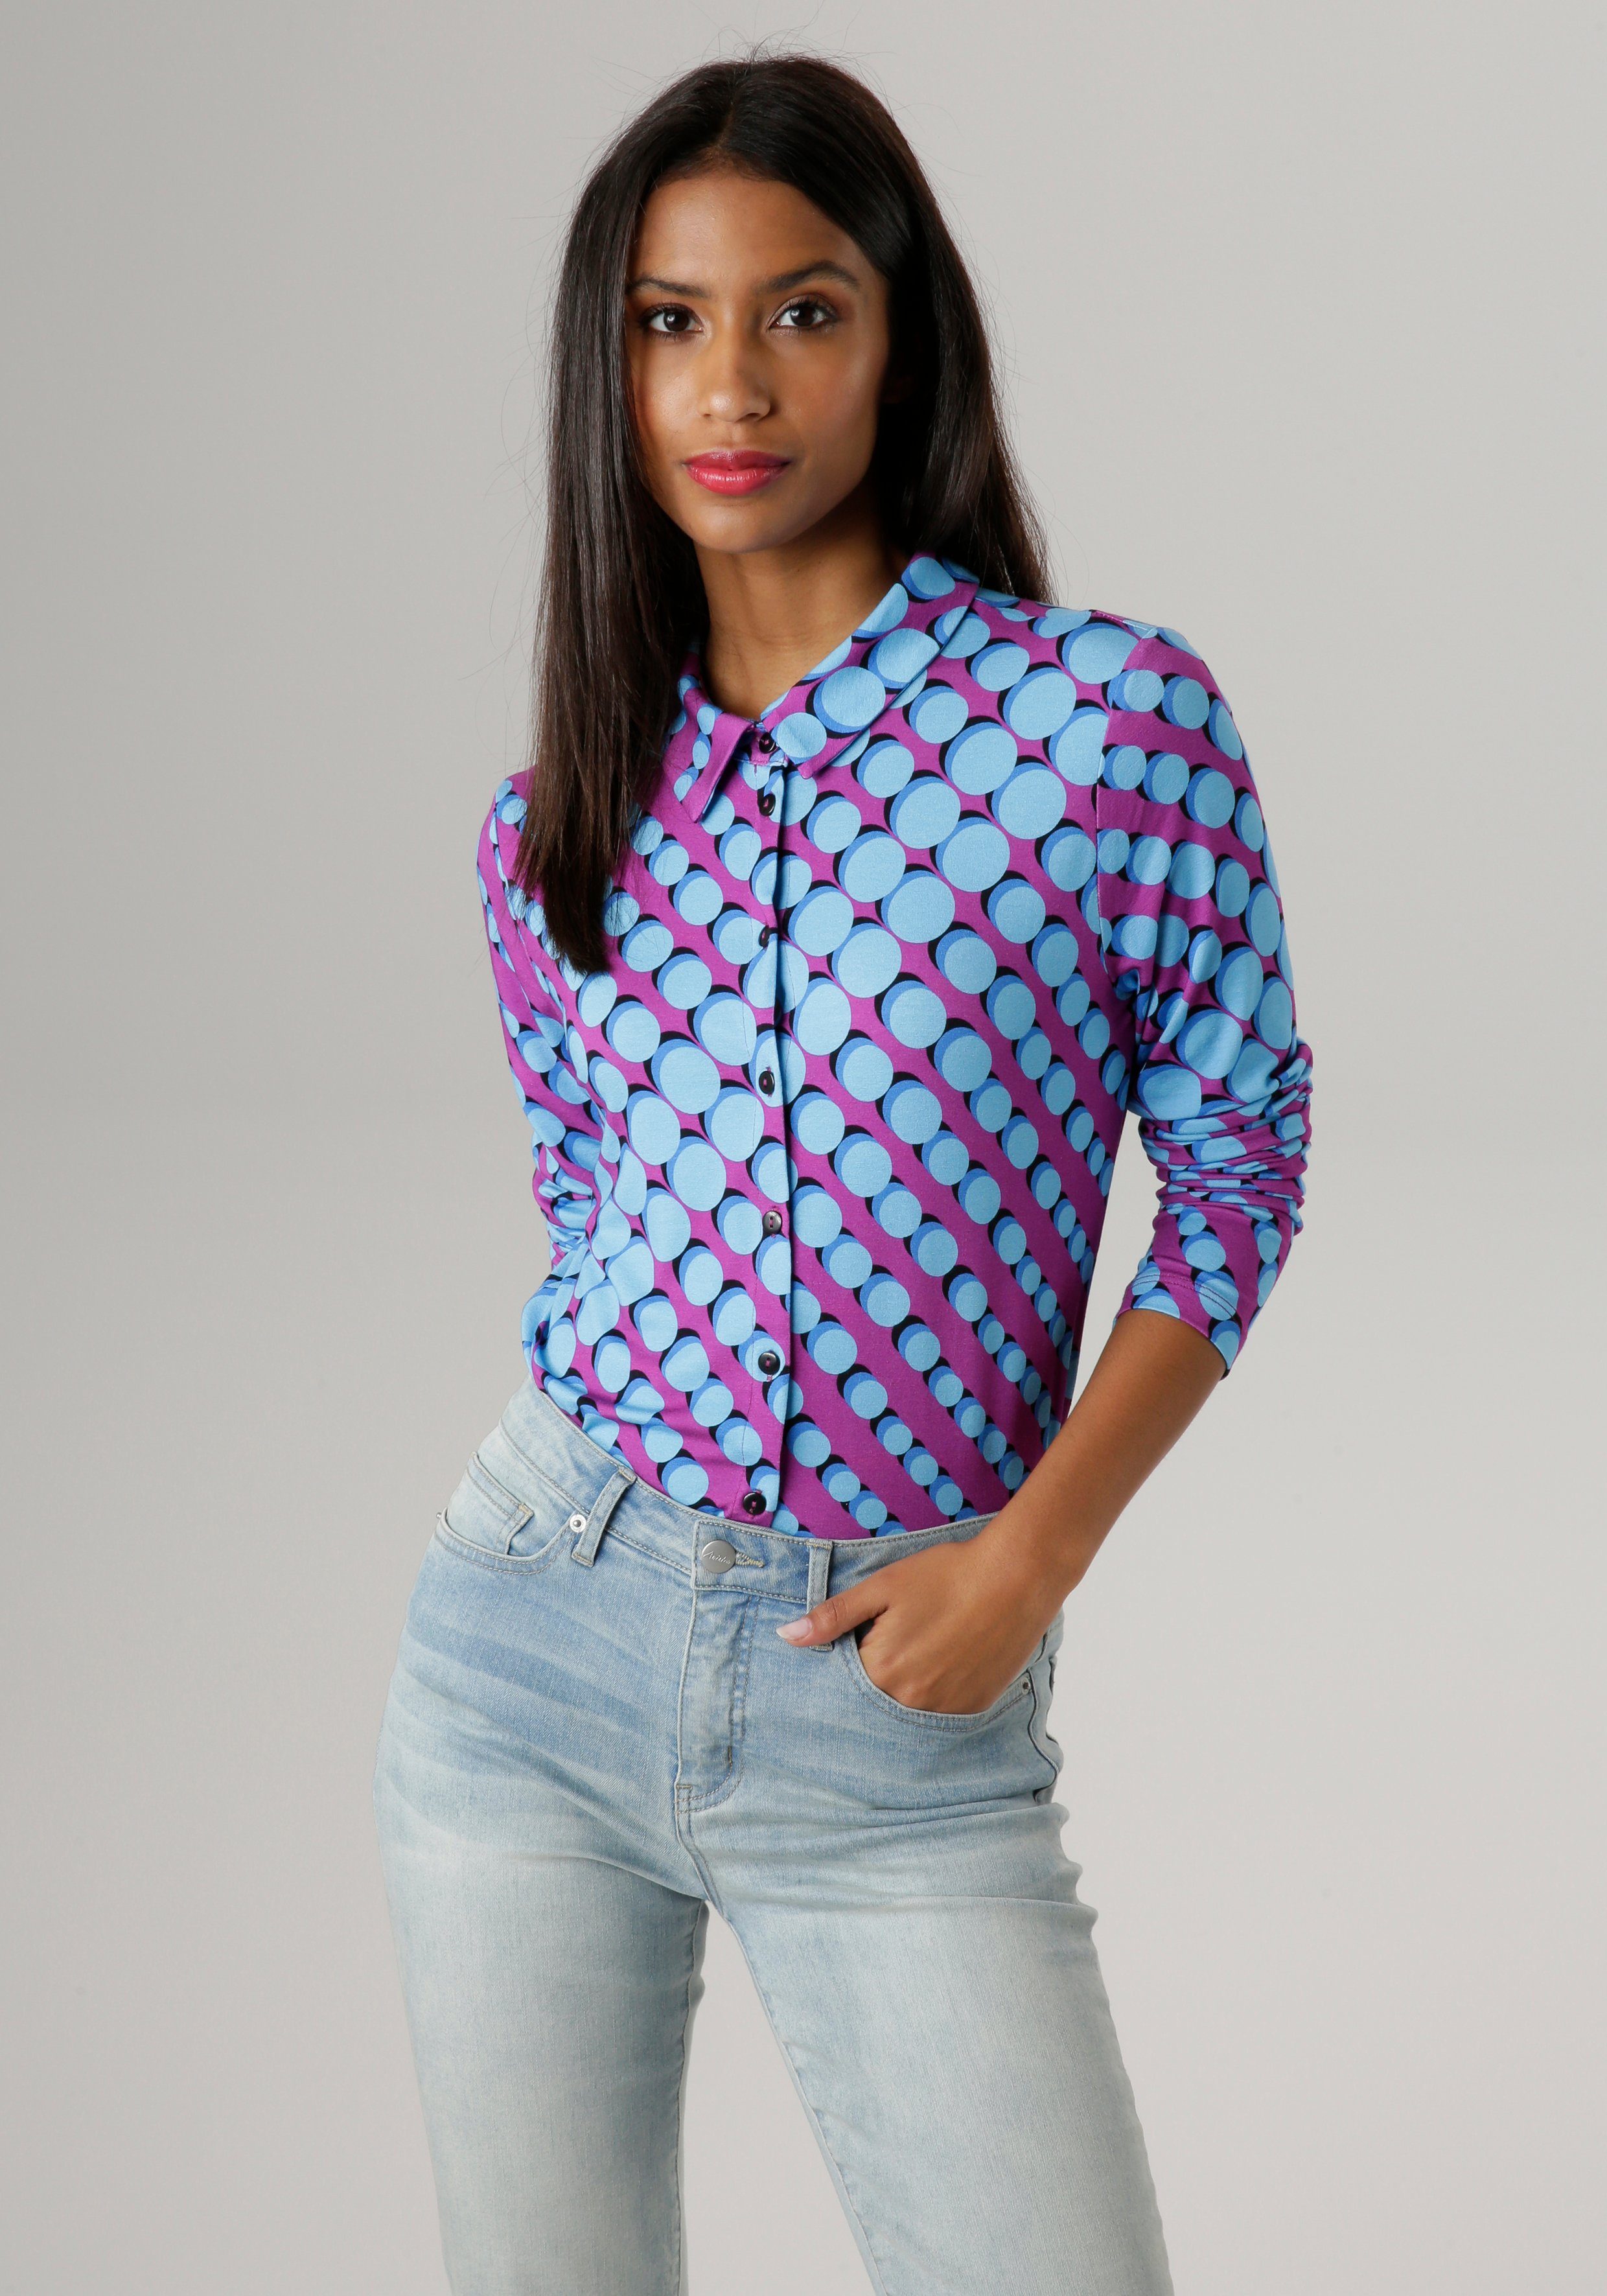 retro SELECTED - KOLLEKTION Jersey, aus Punktedruck NEUE Hemdbluse mit elastischem Aniston